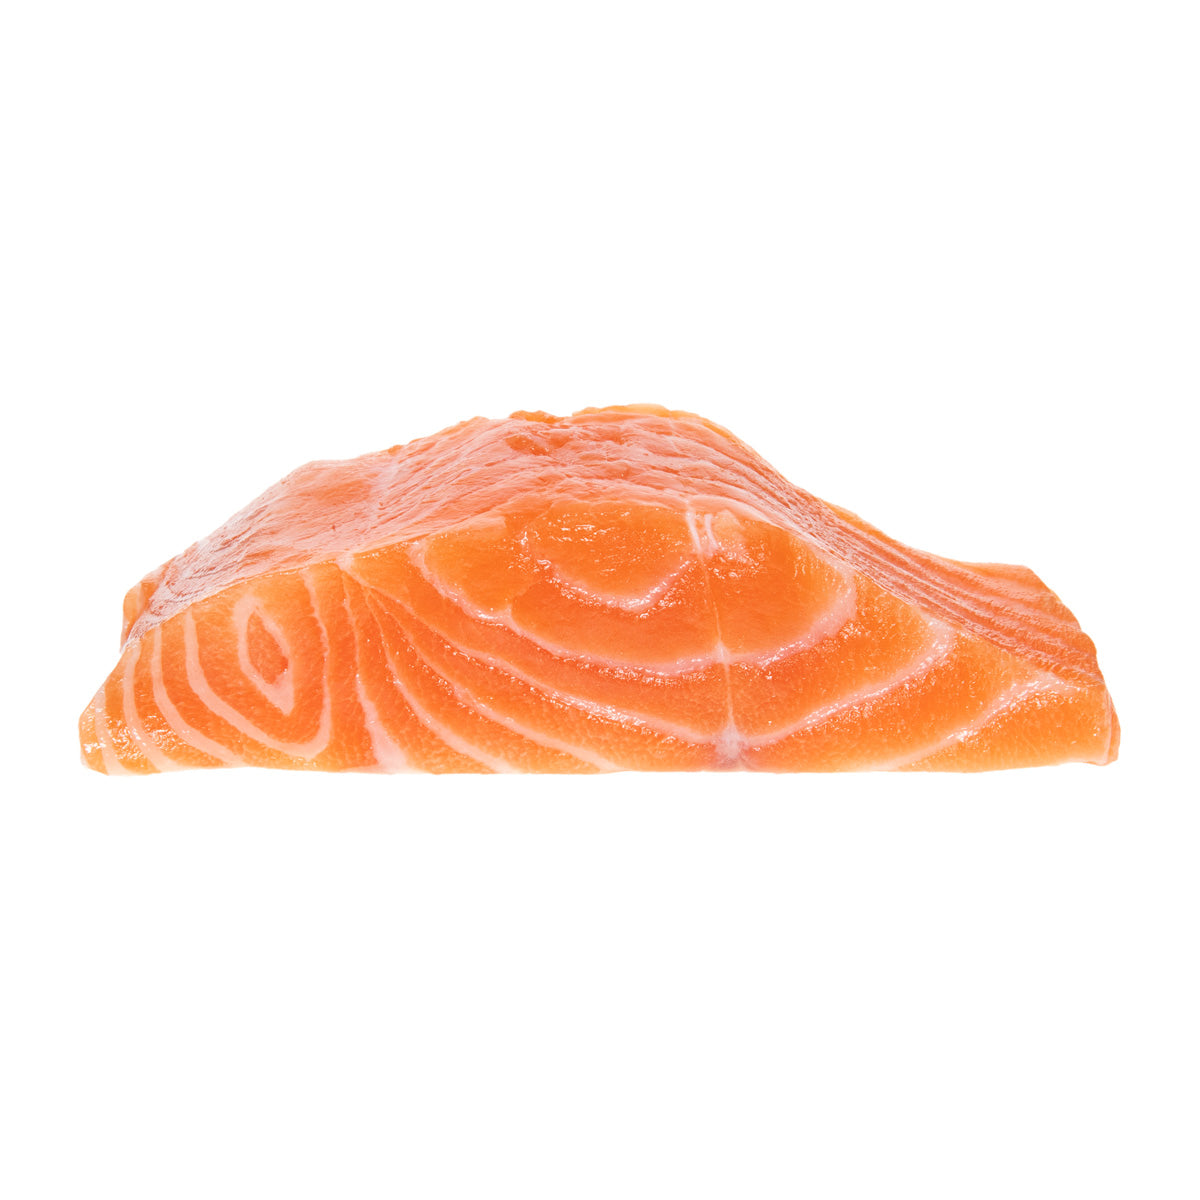 Pierless Fish Farm Raised PBO Scottish Salmon Portion 6 OZ